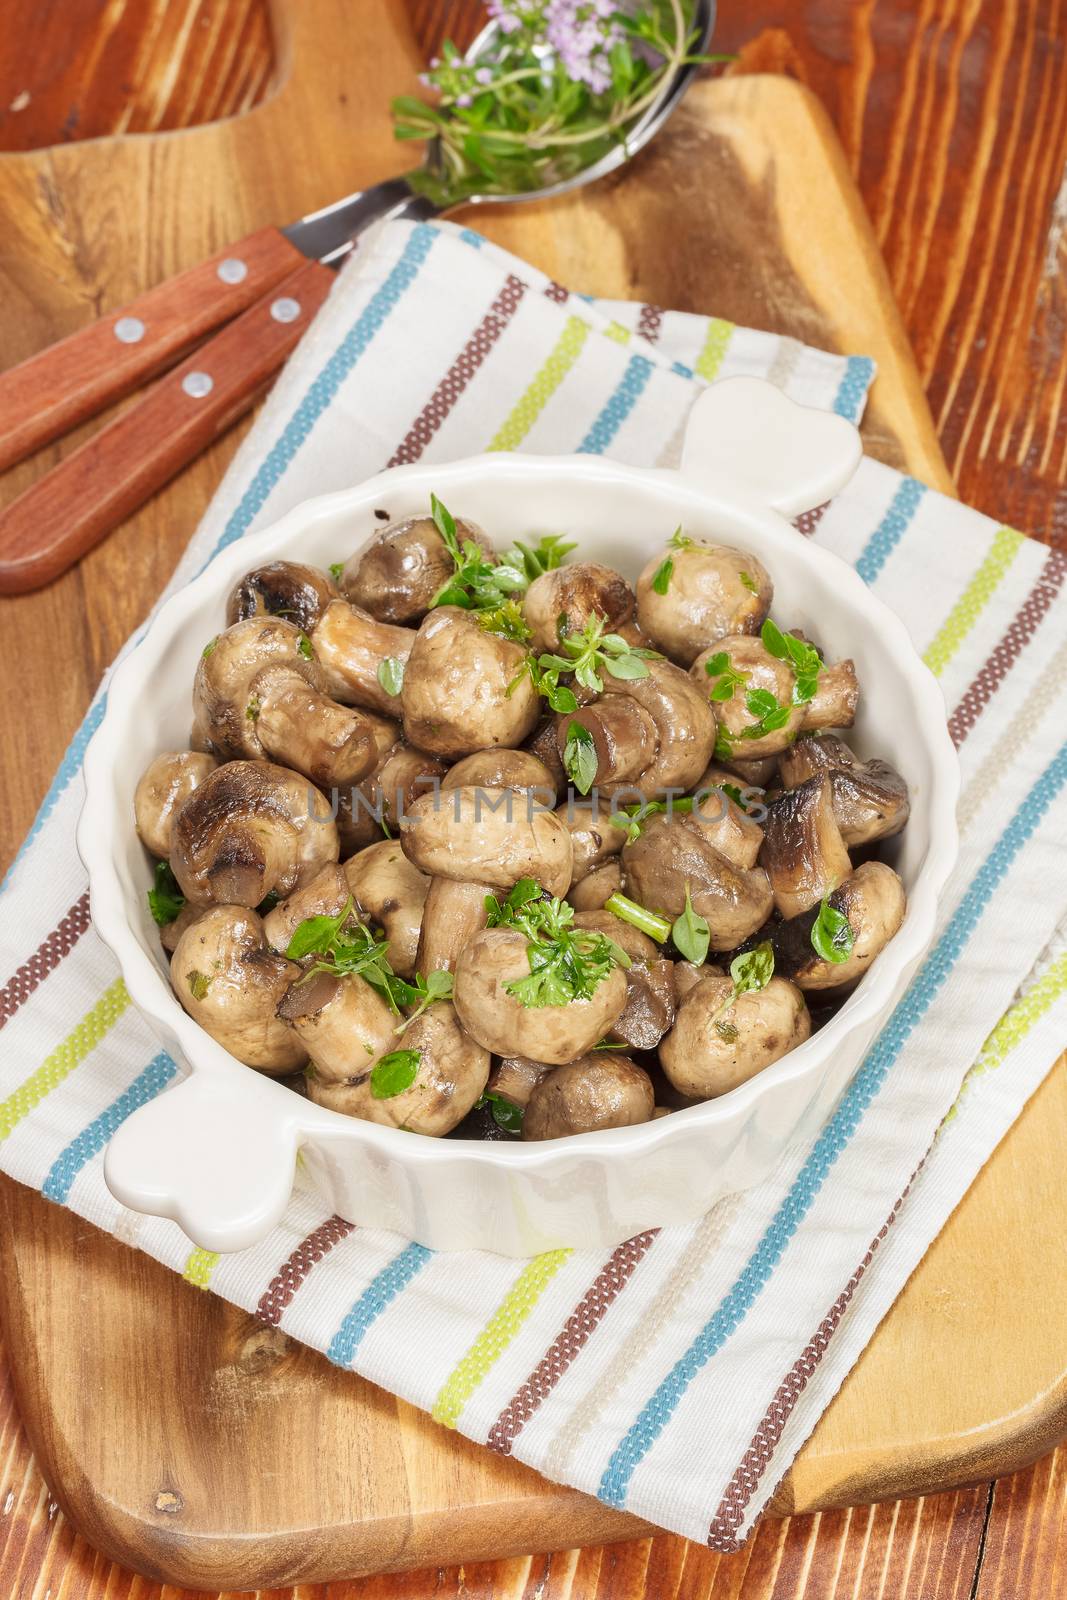 Mushrooms with garlic, thyme, and balsamic vinegar